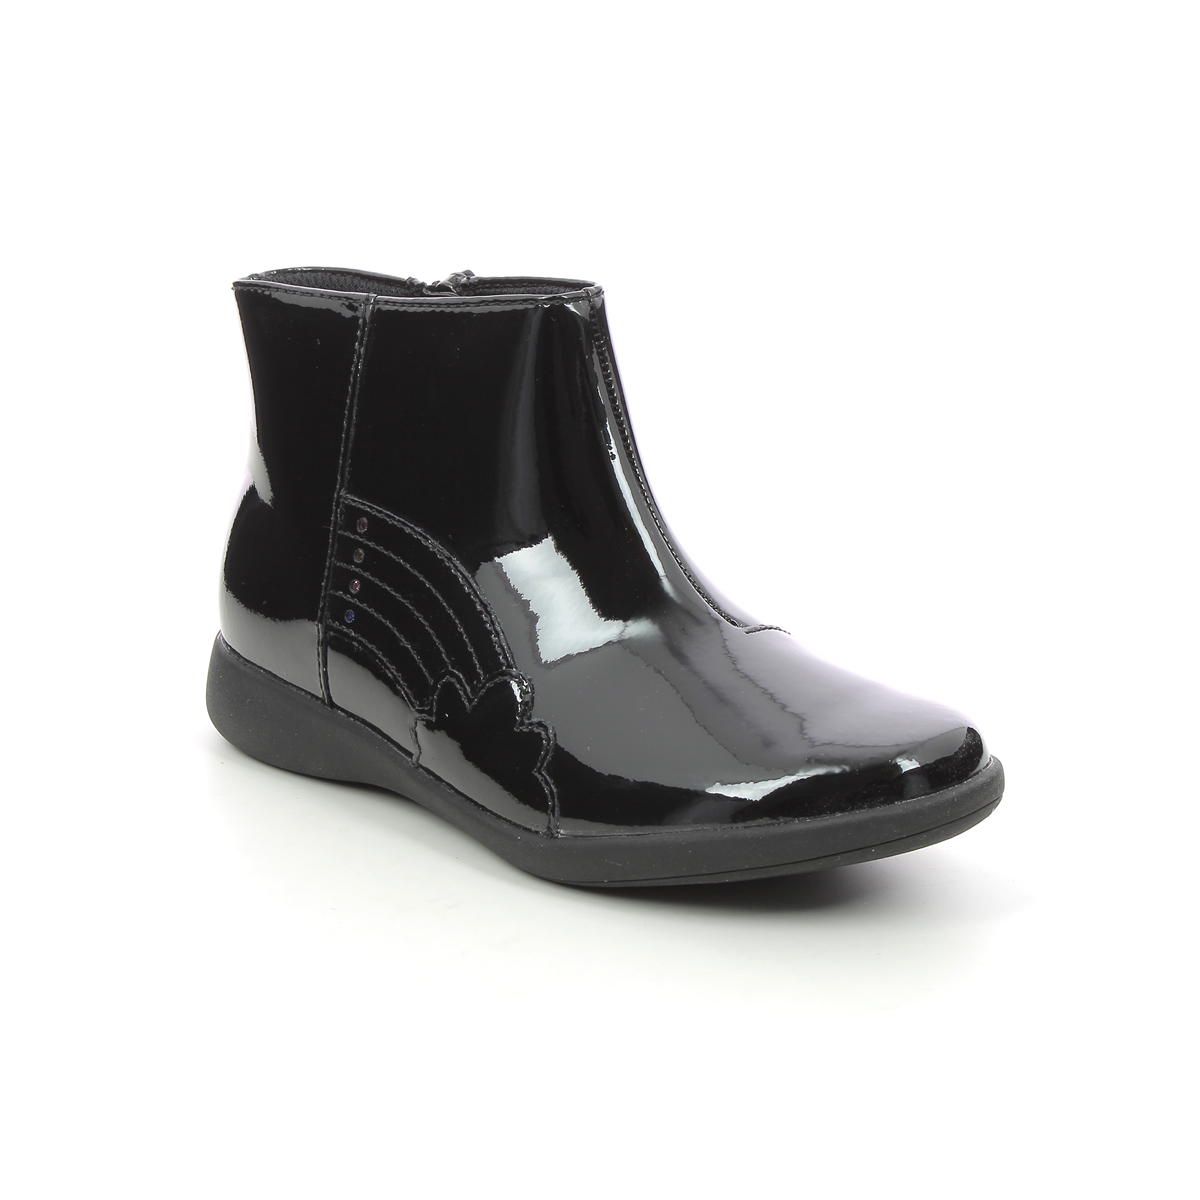 Clarks Etch Glow K Black Patent Kids Girls Boots 628486F In Size 1.5 In Plain Black Patent F Width Fitting Regular Fit For kids